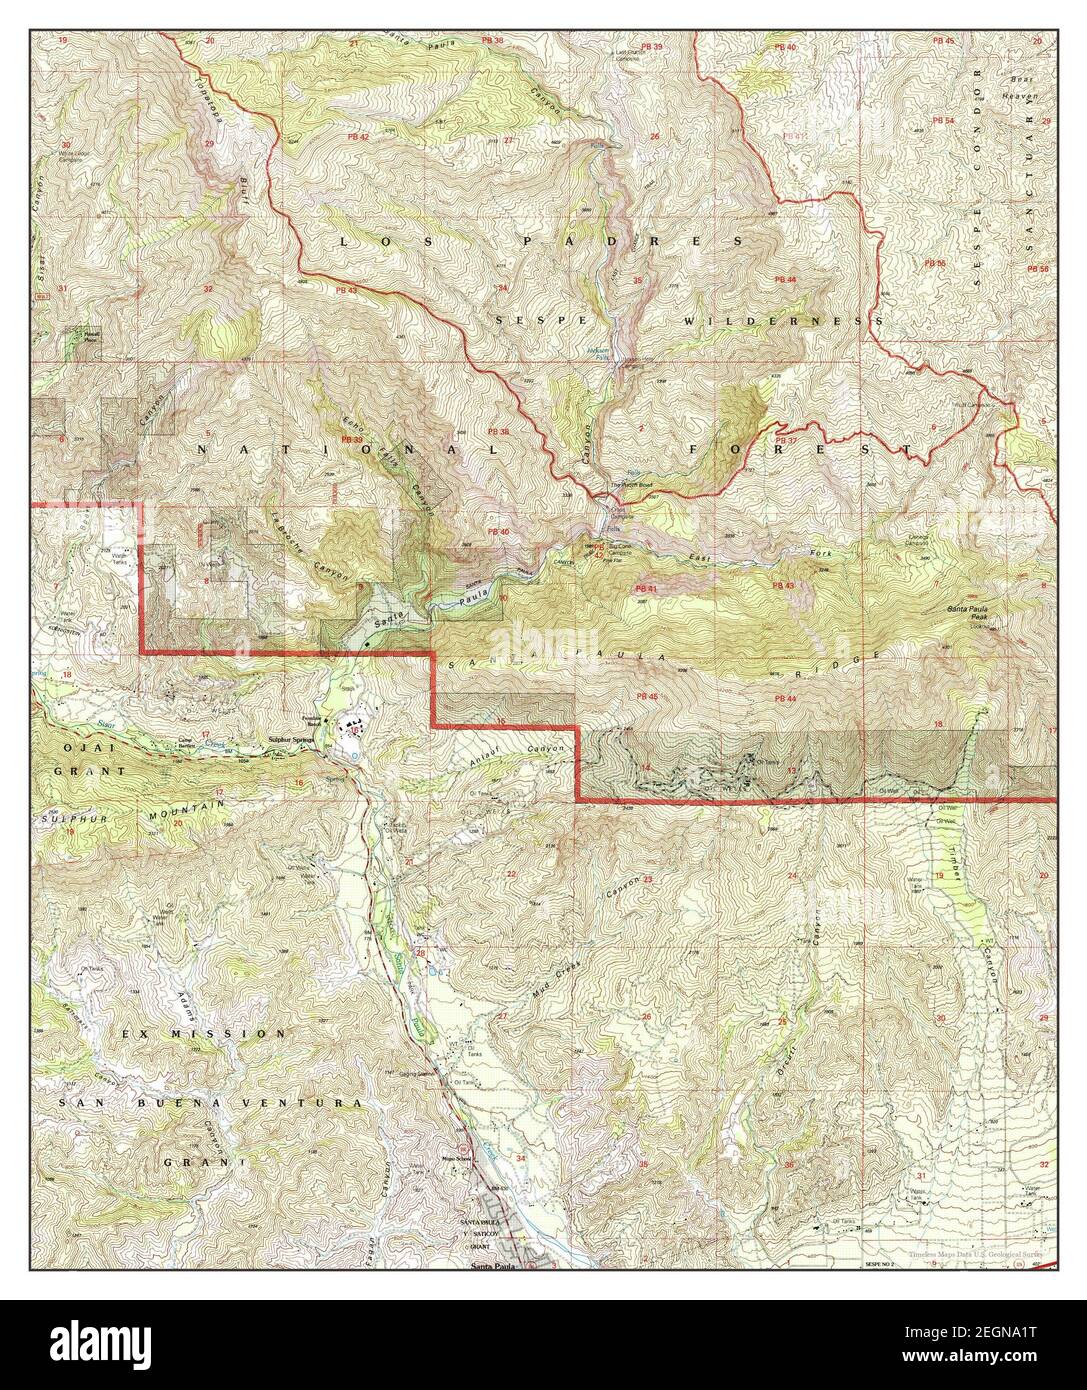 Santa Paula Peak, California, map 1995, 1:24000, United States of America by Timeless Maps, data U.S. Geological Survey Stock Photo